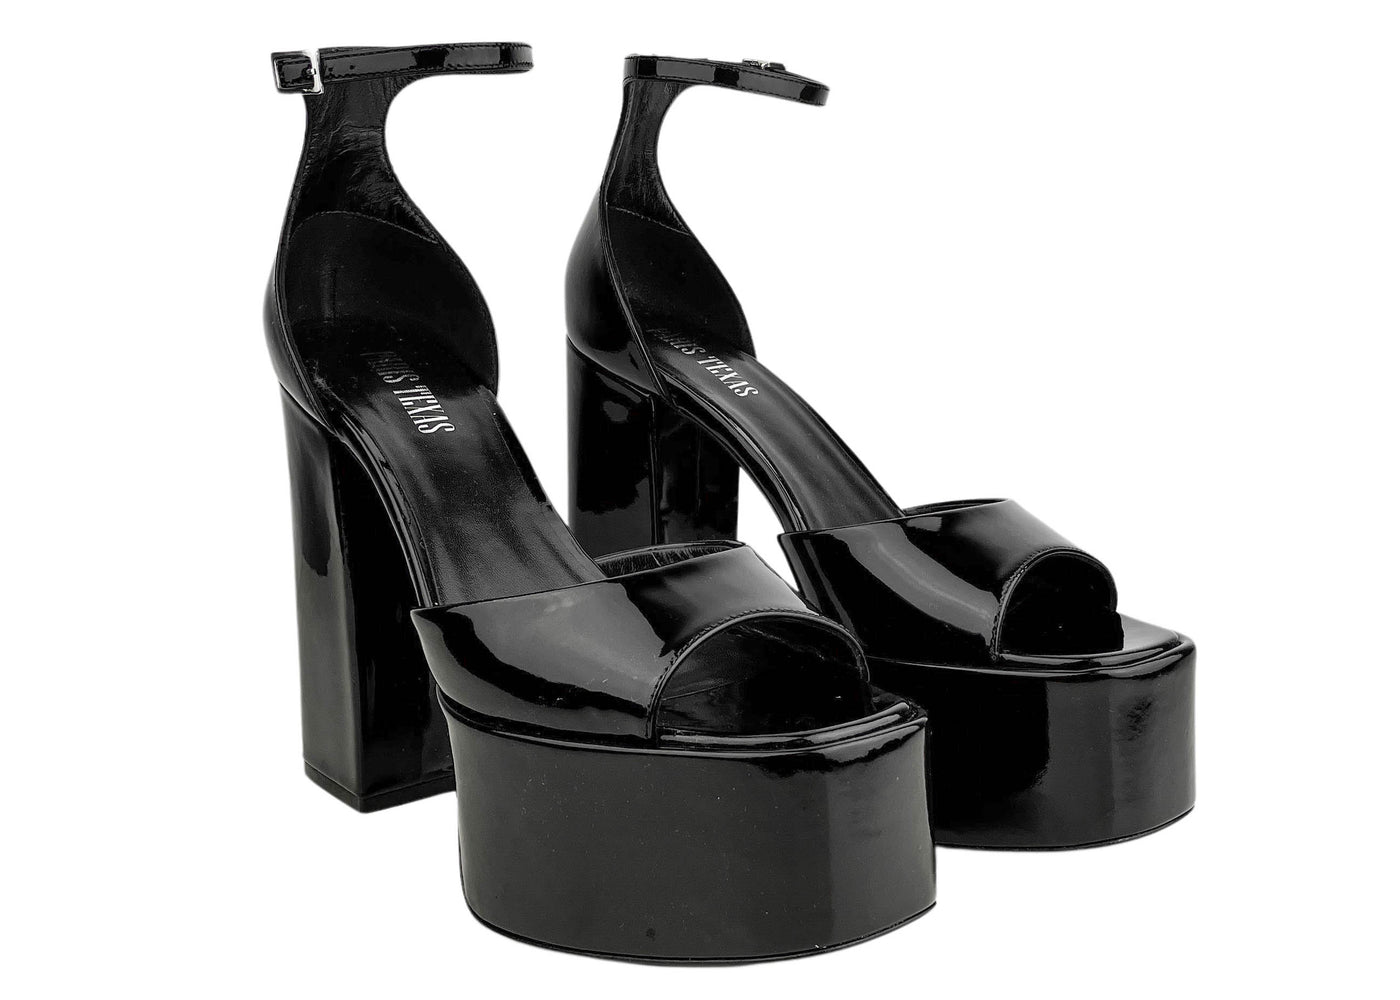 Paris Texas Tatiana Platform Sandals in Black Patent Leather - Discounts on Paris Texas at UAL